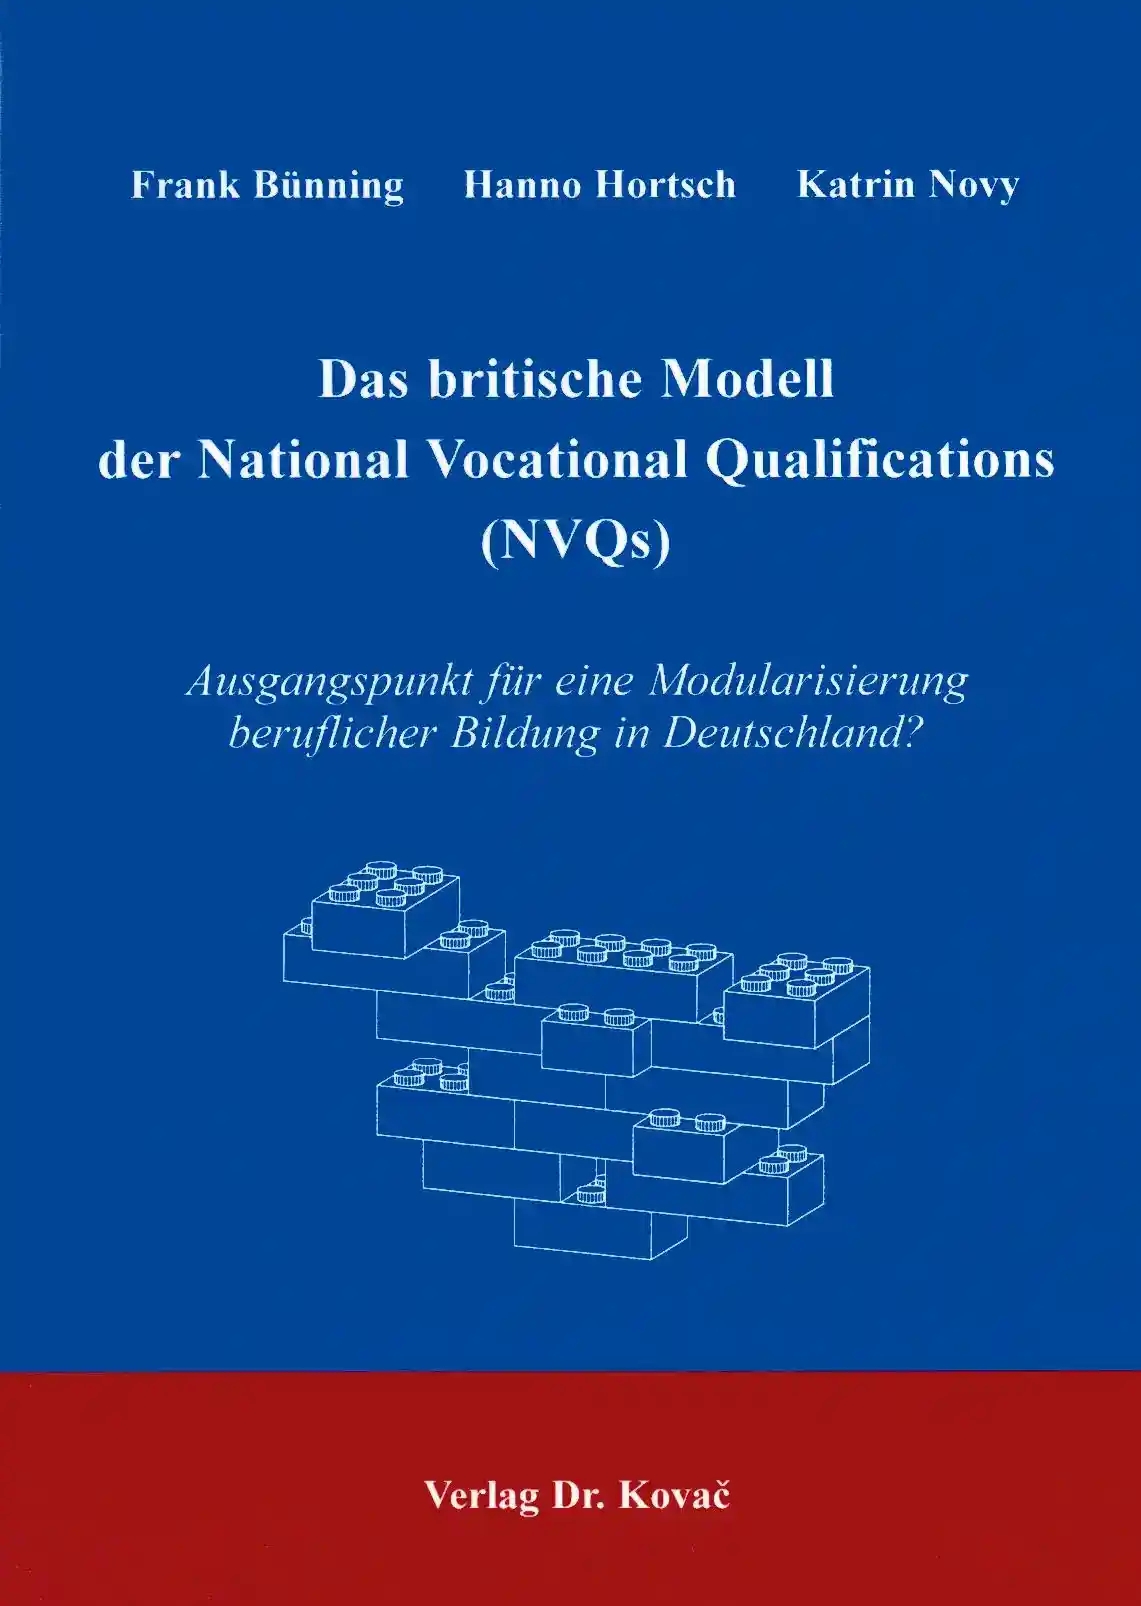 Das britische Modell der National Vocational Qualifications (NVQs) (Forschungsarbeit)